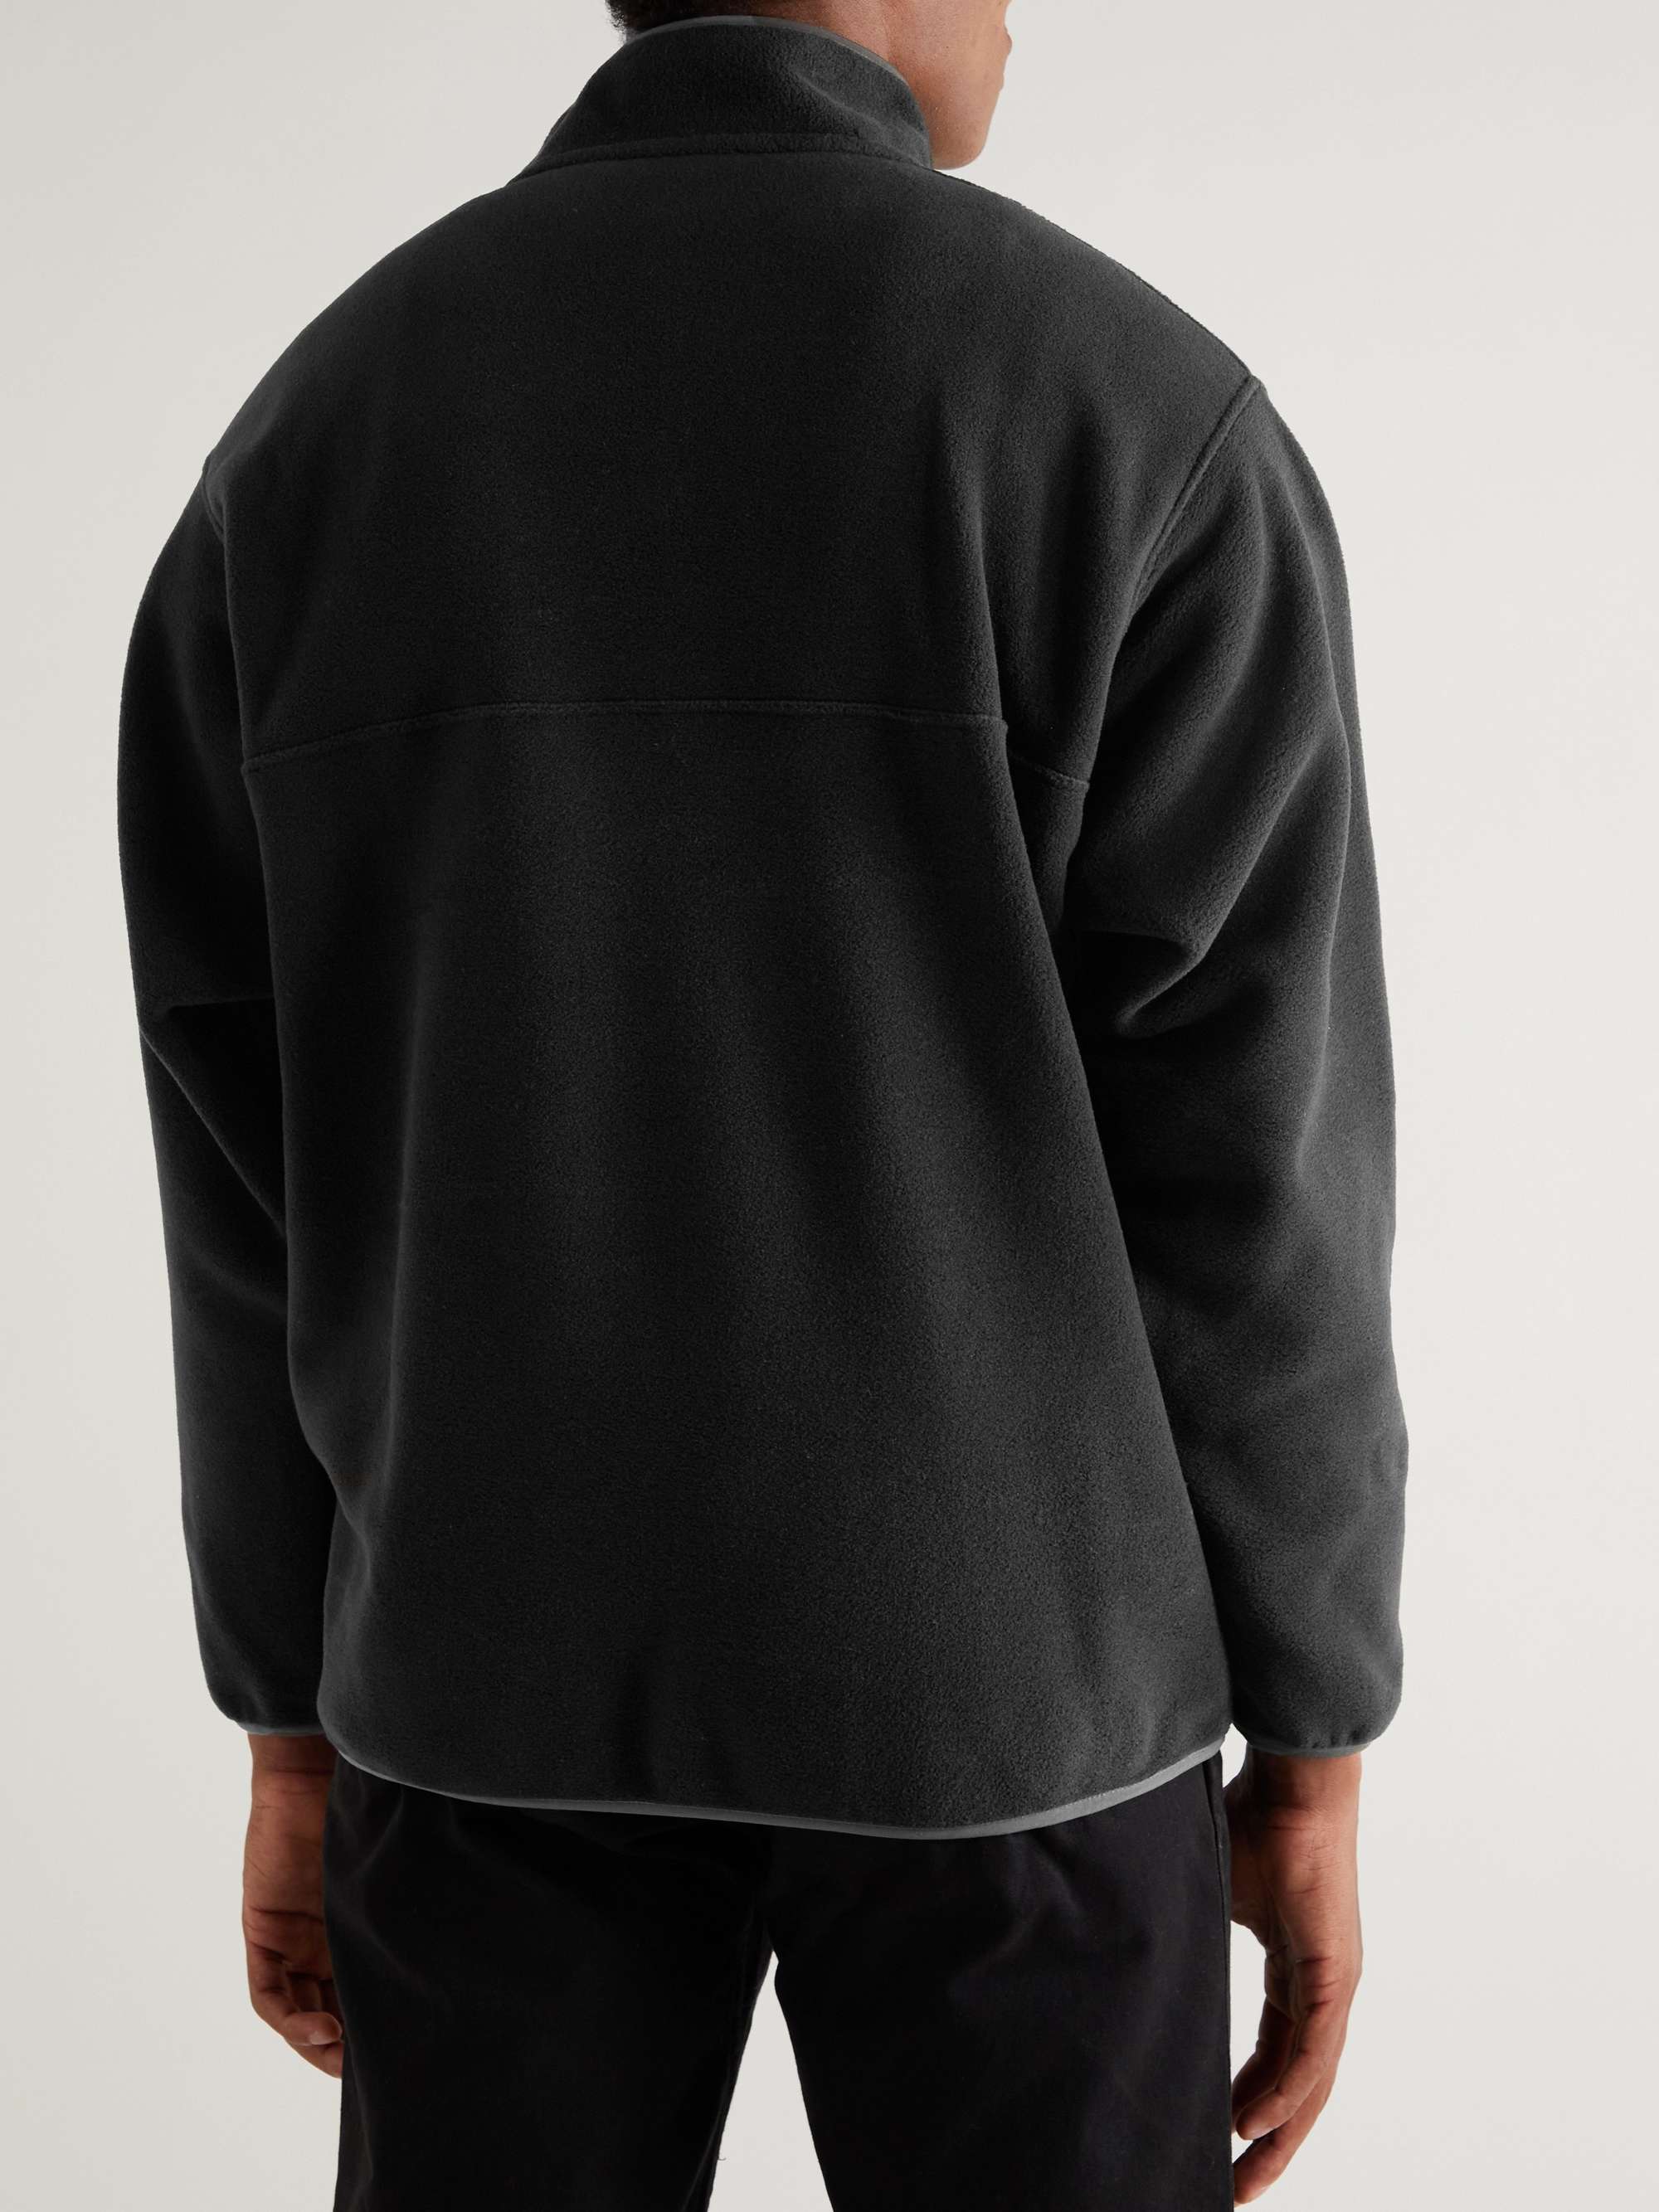 PATAGONIA Synchilla Snap-T Fleece Sweater